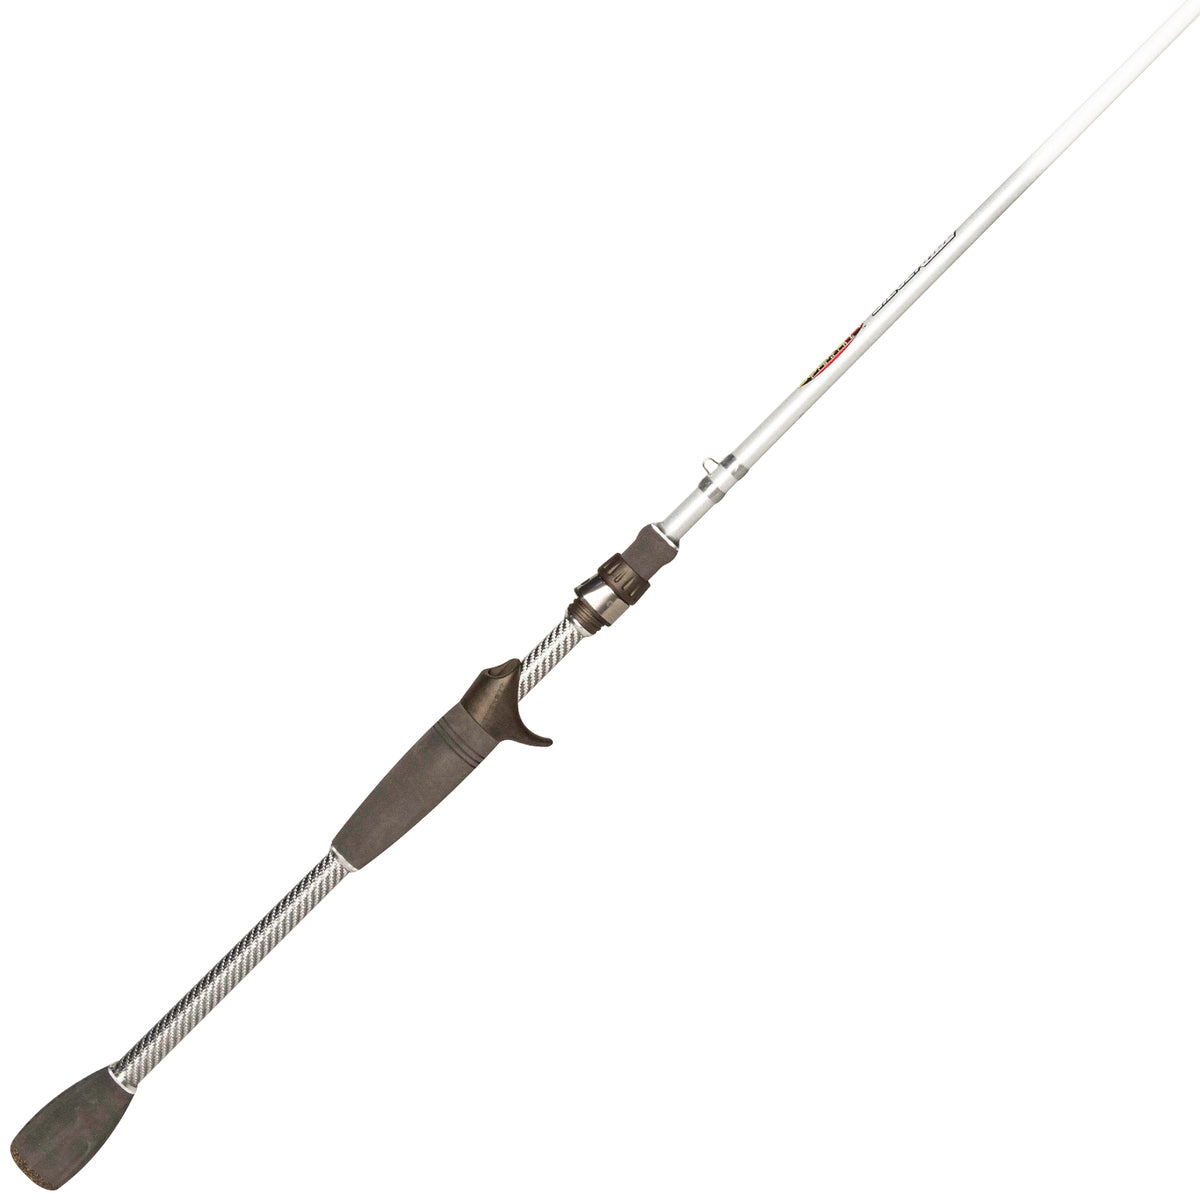 Duckett Silverado Series Casting Rods - Angler's Headquarters